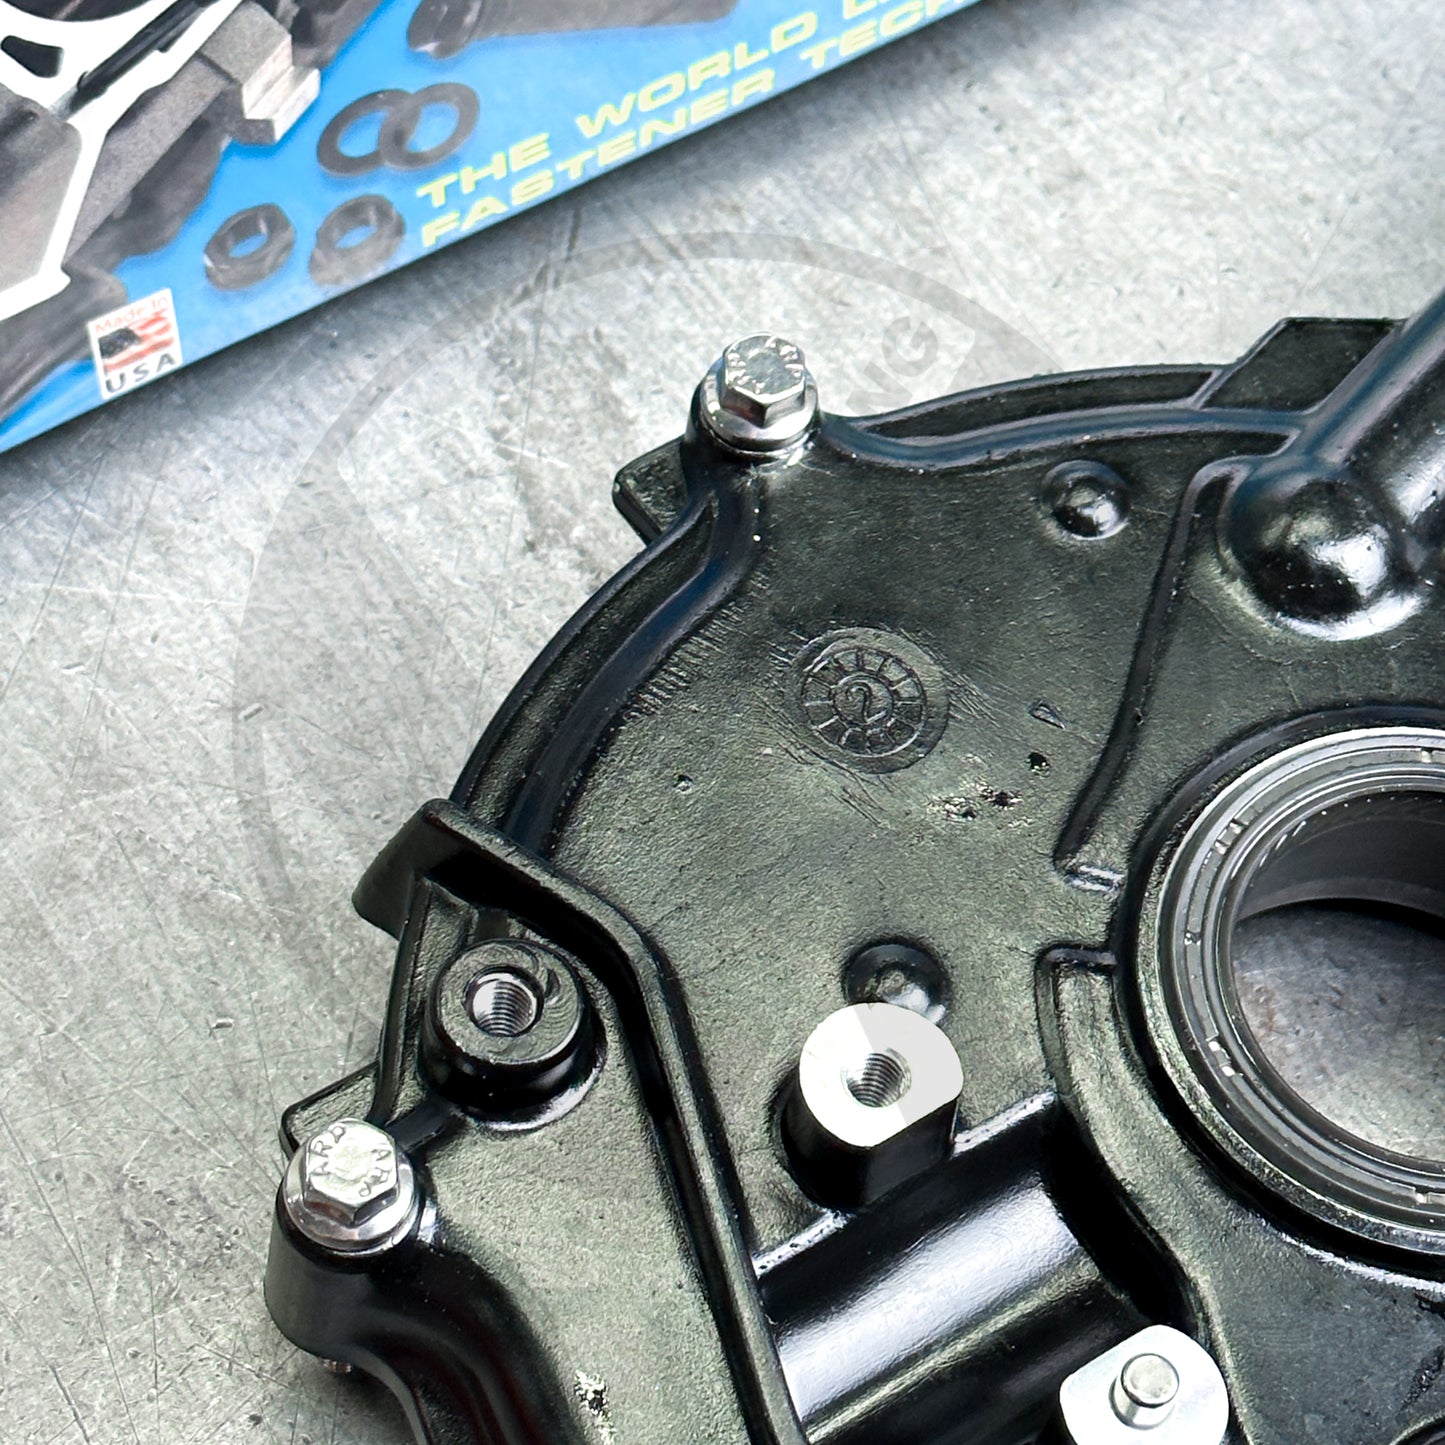 ARP Stainless Steel Oil Pump Bolt Kit For Honda / Acura B Series Honda Civic Acura Integra